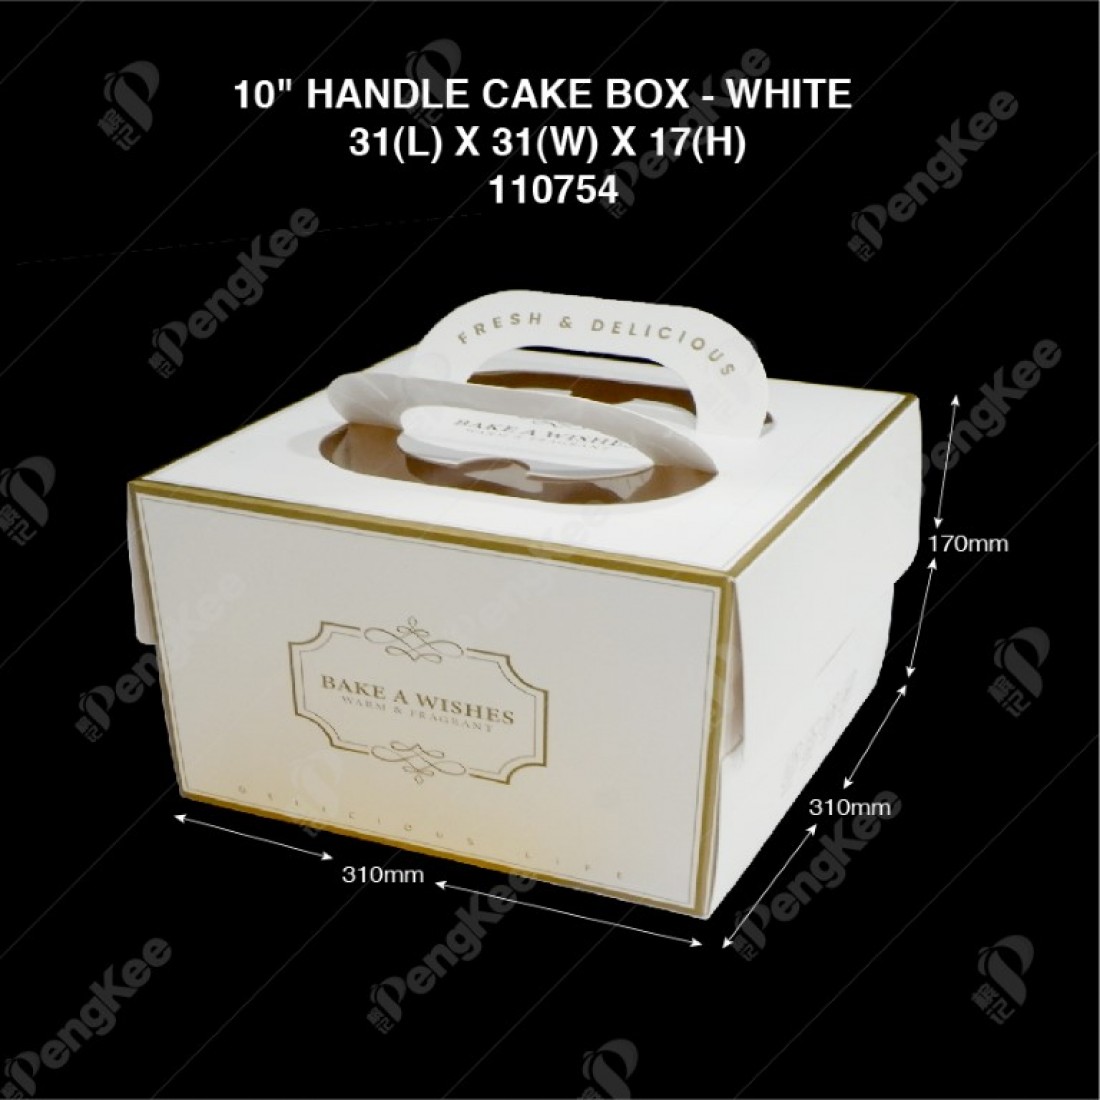 10" HANDLE CAKE BOX (31(L)*31(W)*17(H)CM) - WHITE